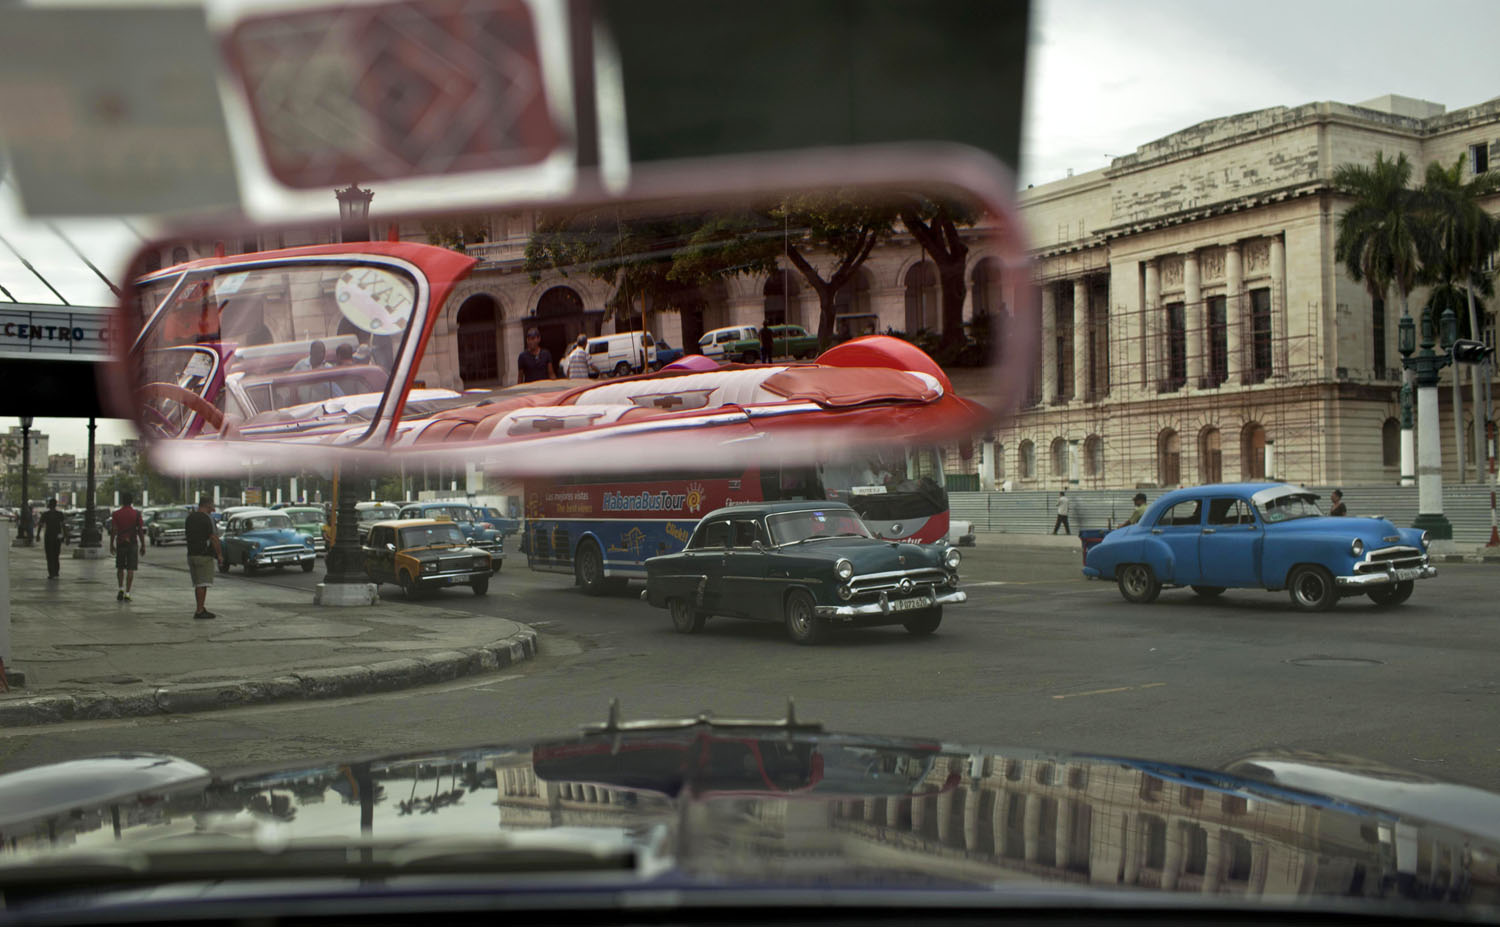 People drive classic American car in Old Havana, Cuba, Oct. 16, 2014.